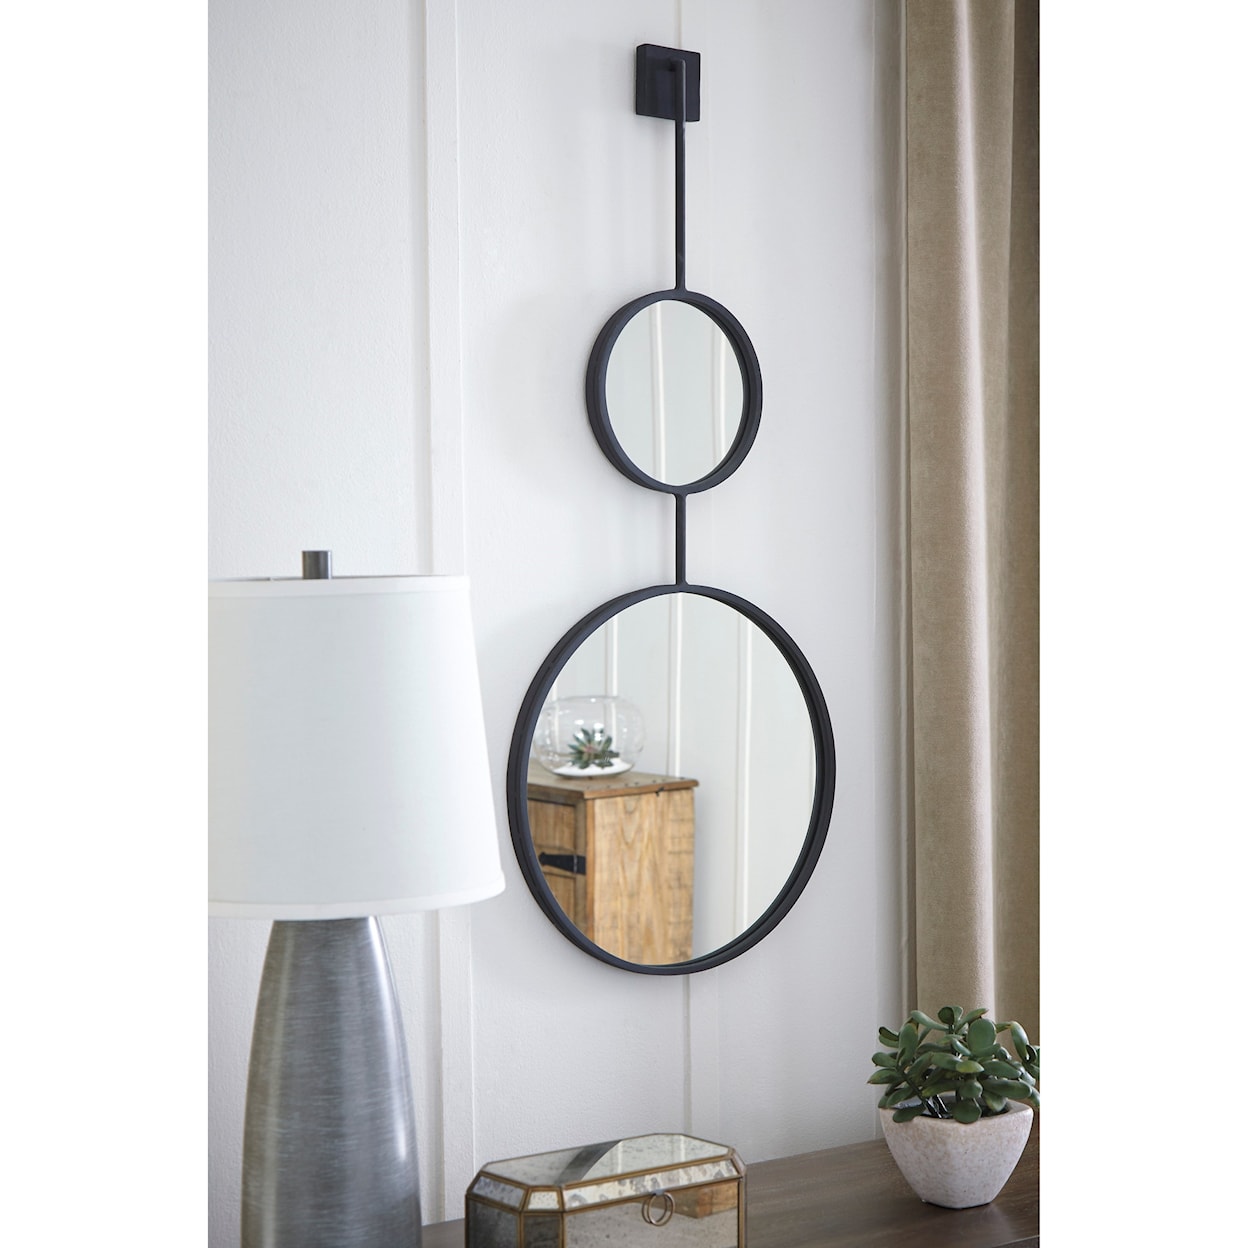 Ashley Furniture Signature Design Accent Mirrors Brewer Black Accent Mirror